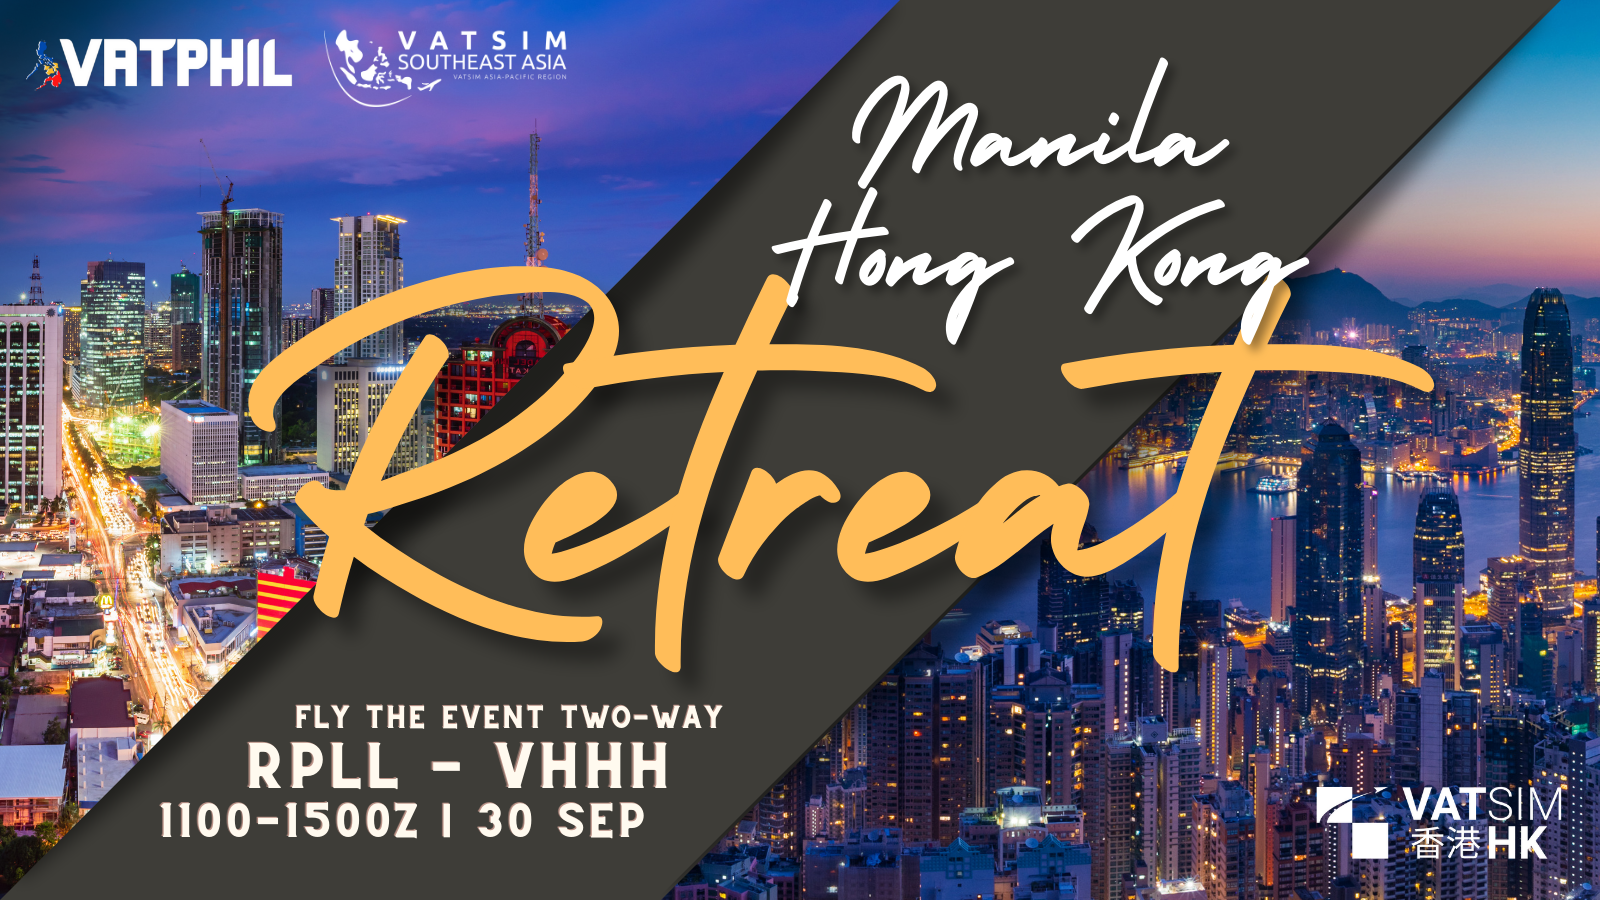 Manila-Hong Kong Retreat